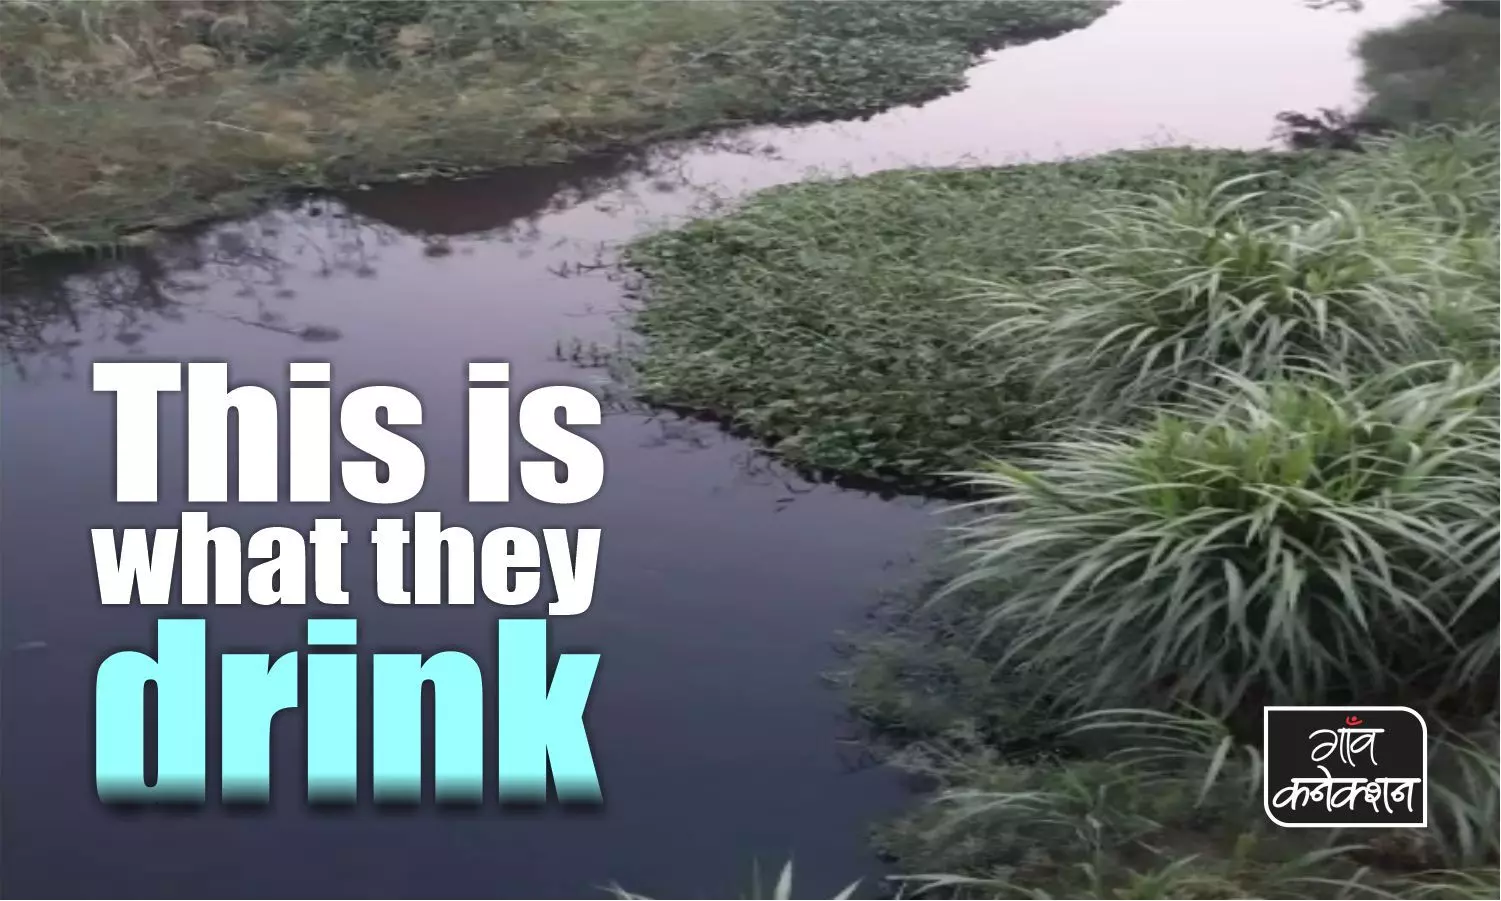 154 villages in Western Uttar Pradesh are drinking toxic water